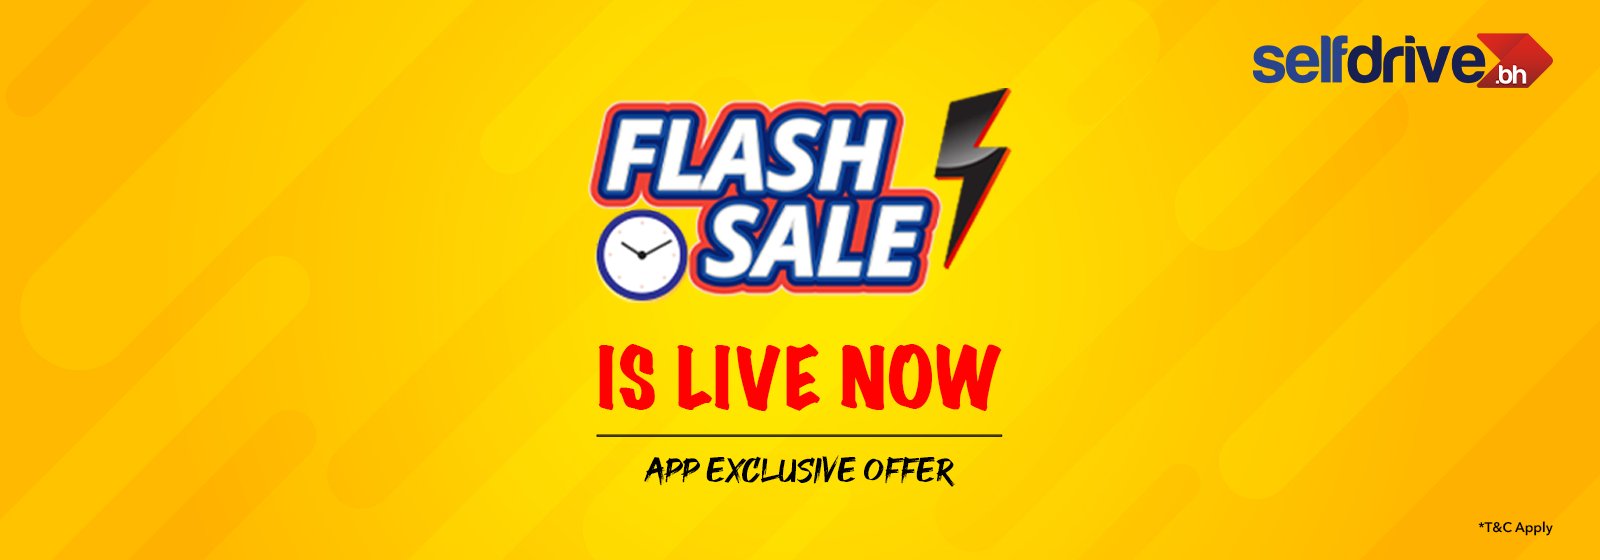 Flash sale is live, car rental, low prices, bahrain, manama